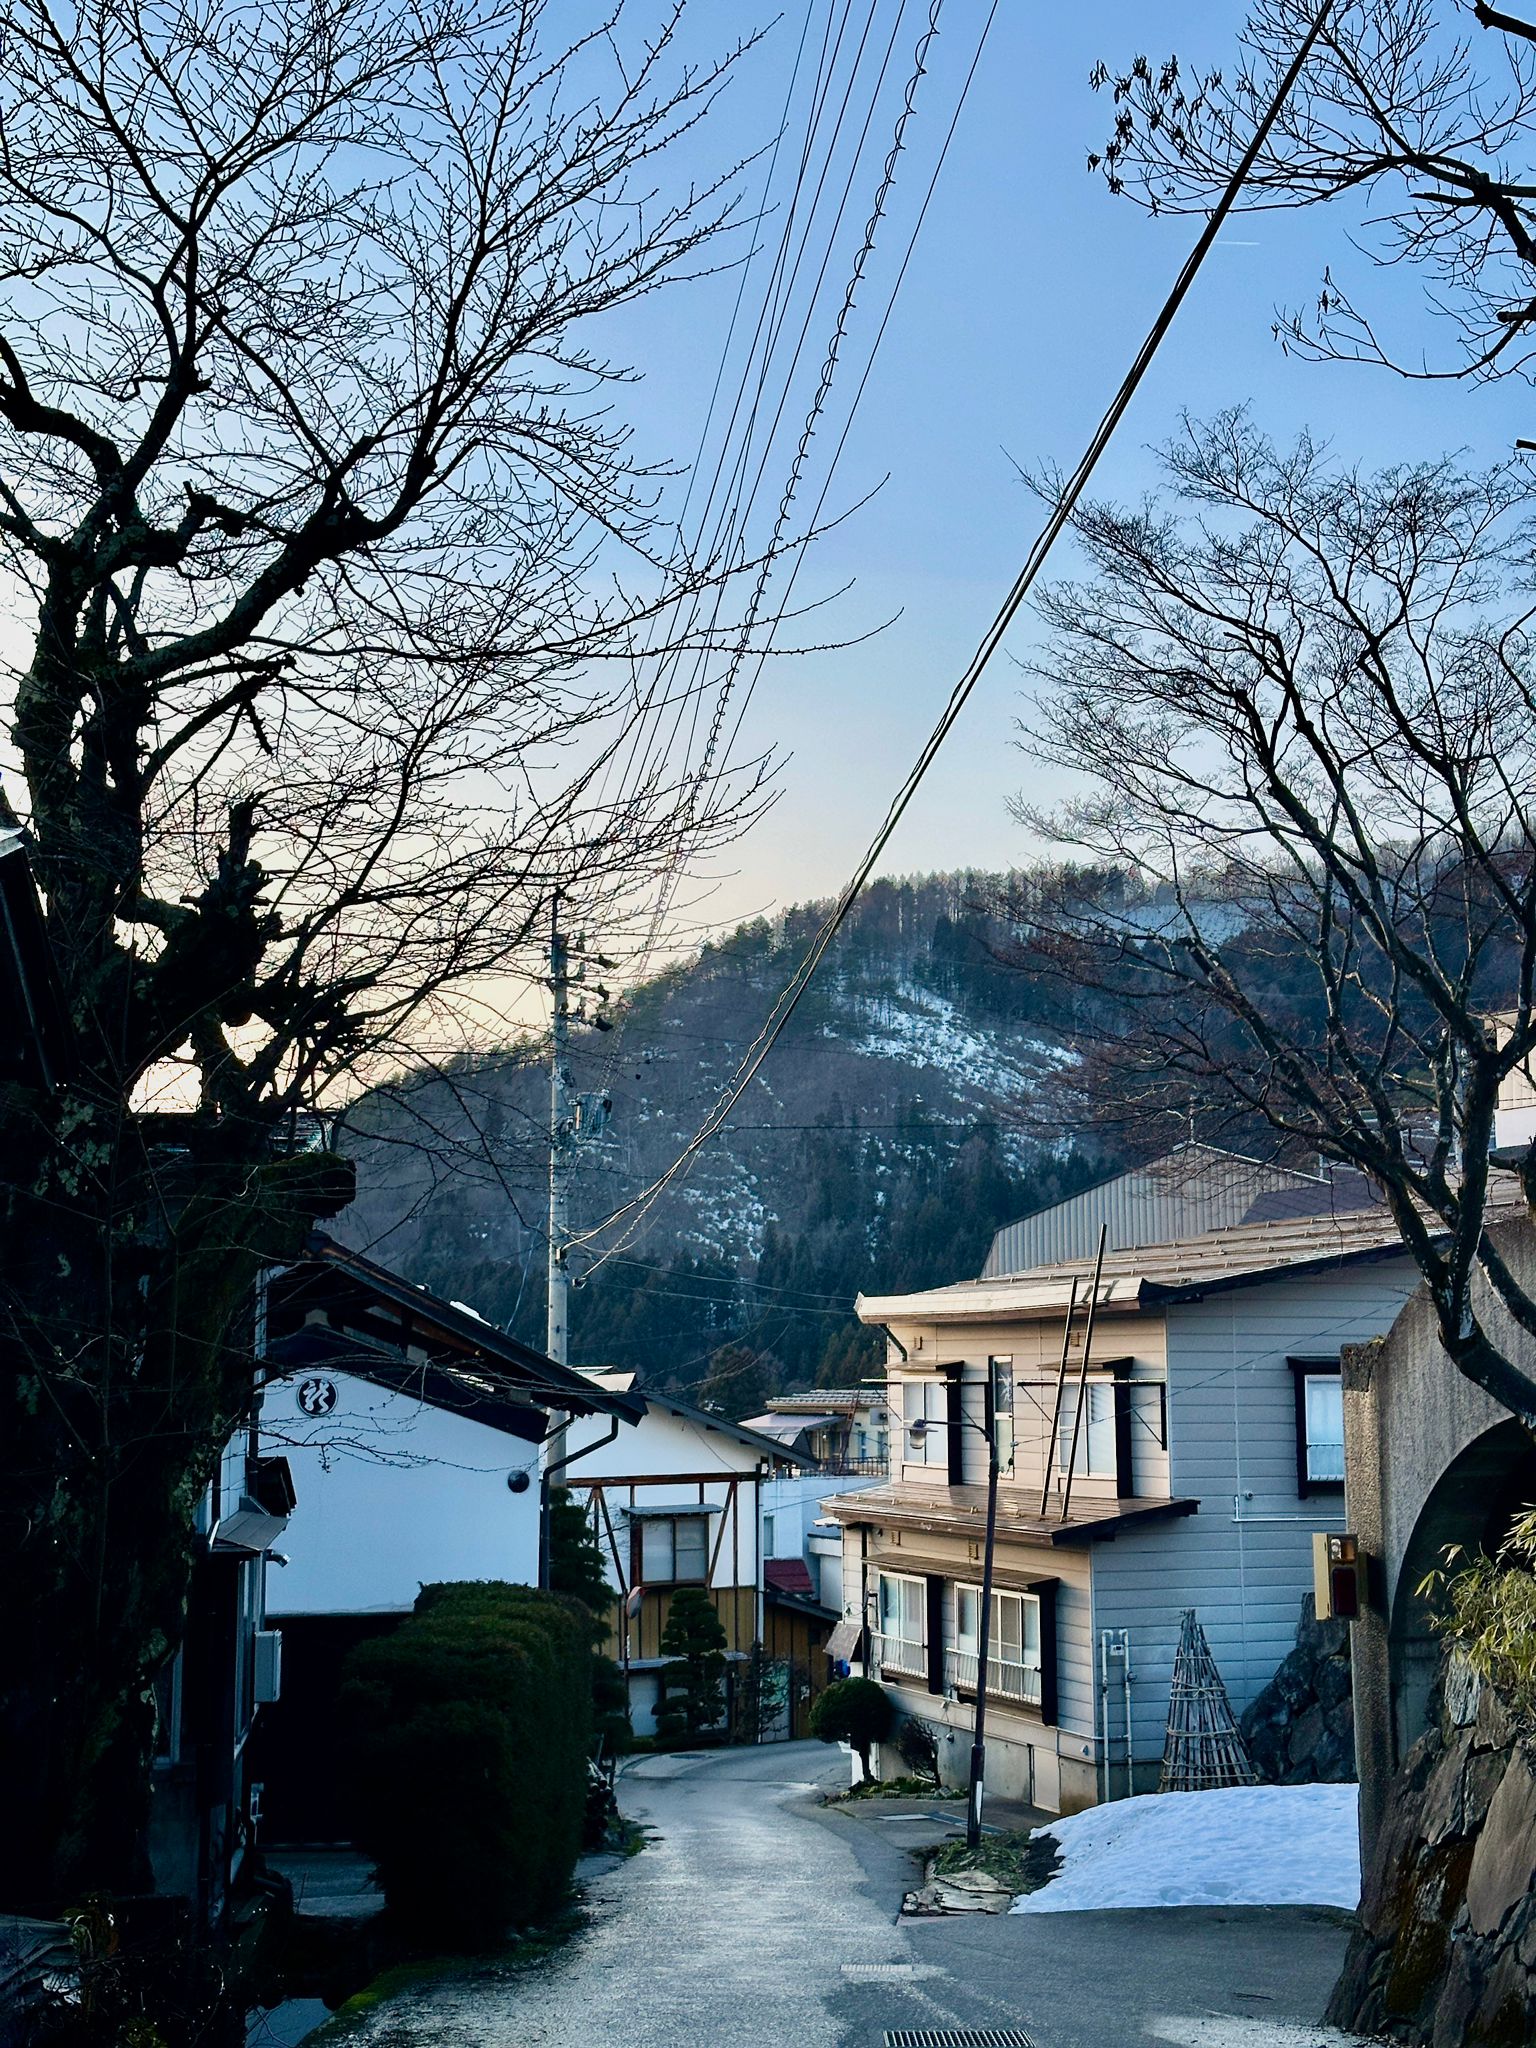 Nozawa village looking downhill